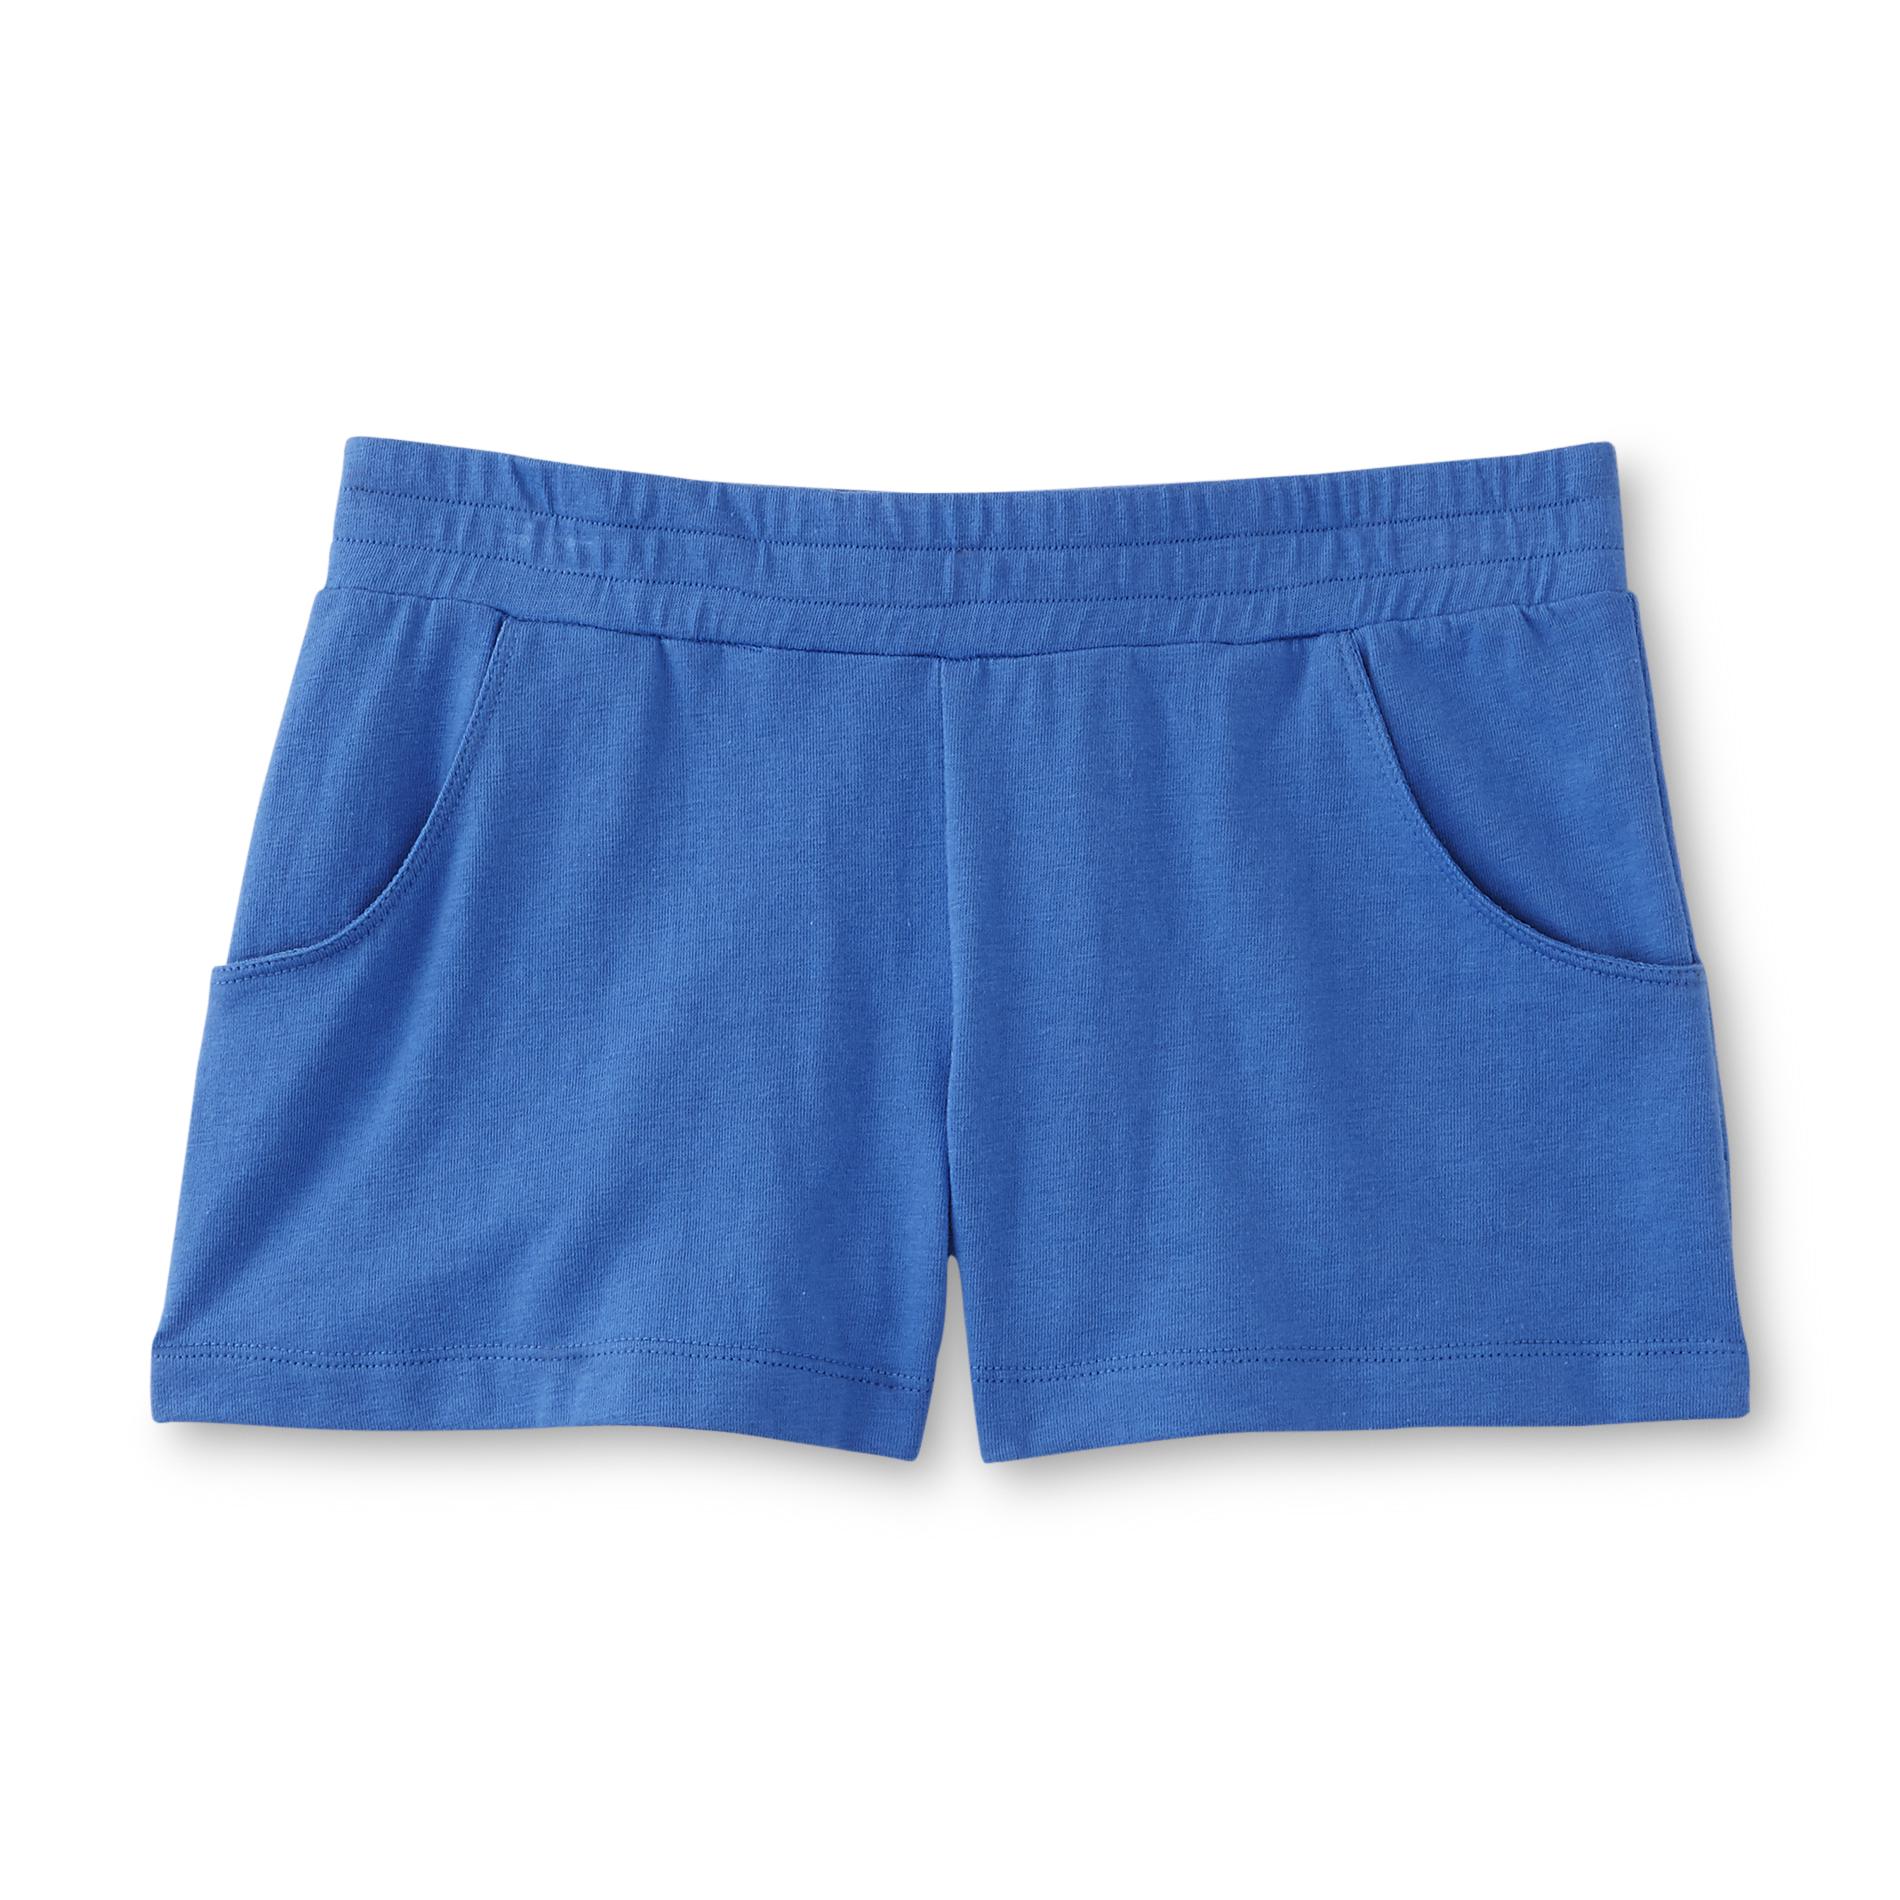 Basic Editions Girl's Knit Shorts